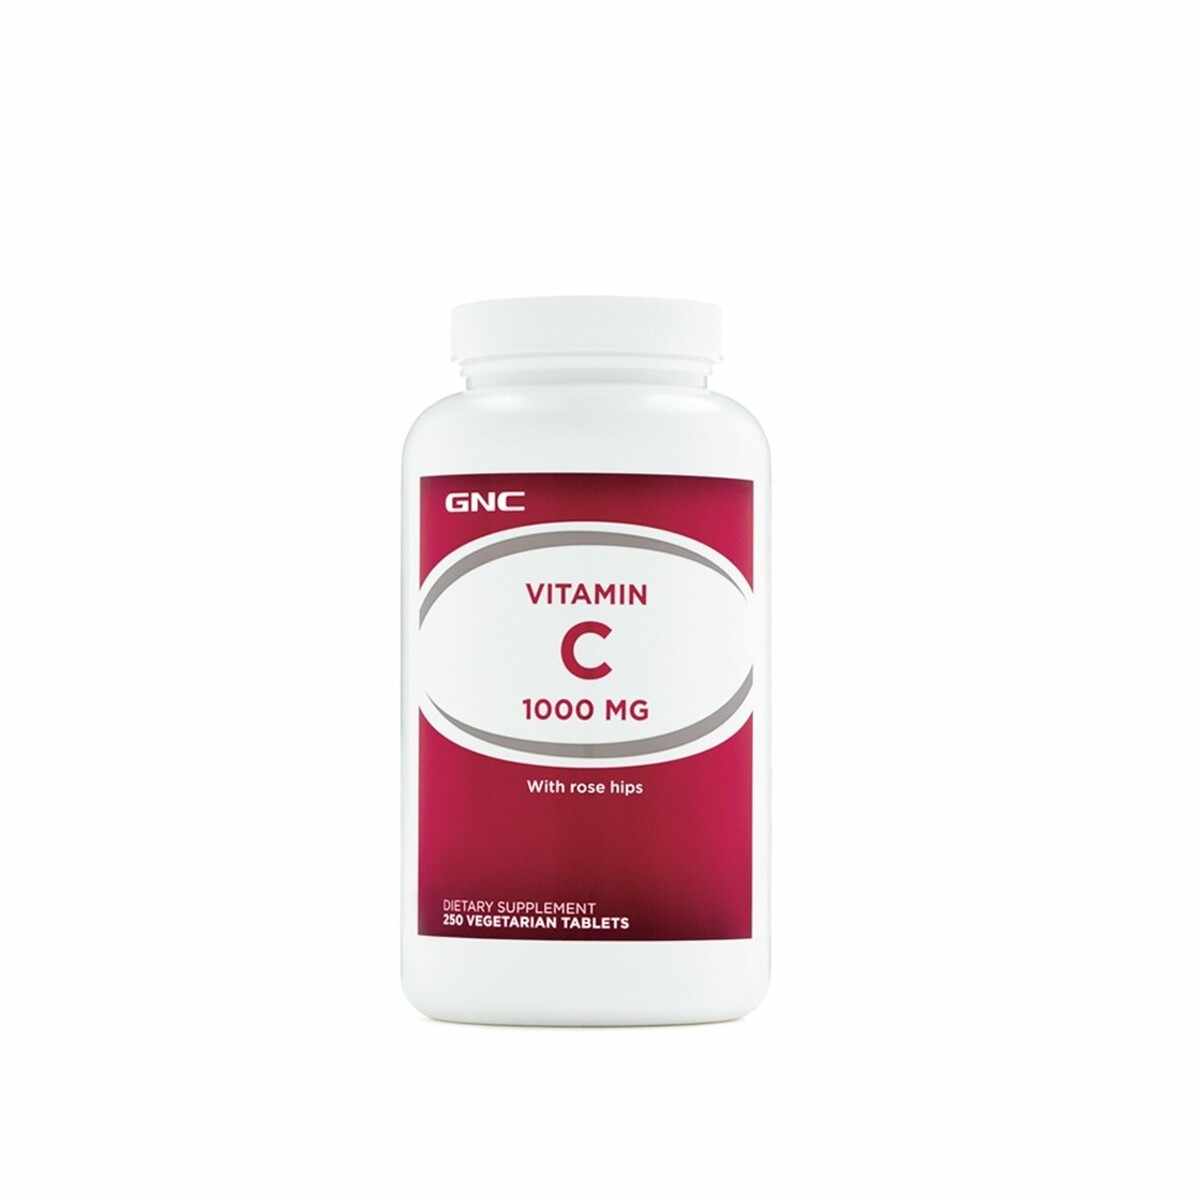 Vitamina C 1000mg cu macese, 250 tablete, GNC